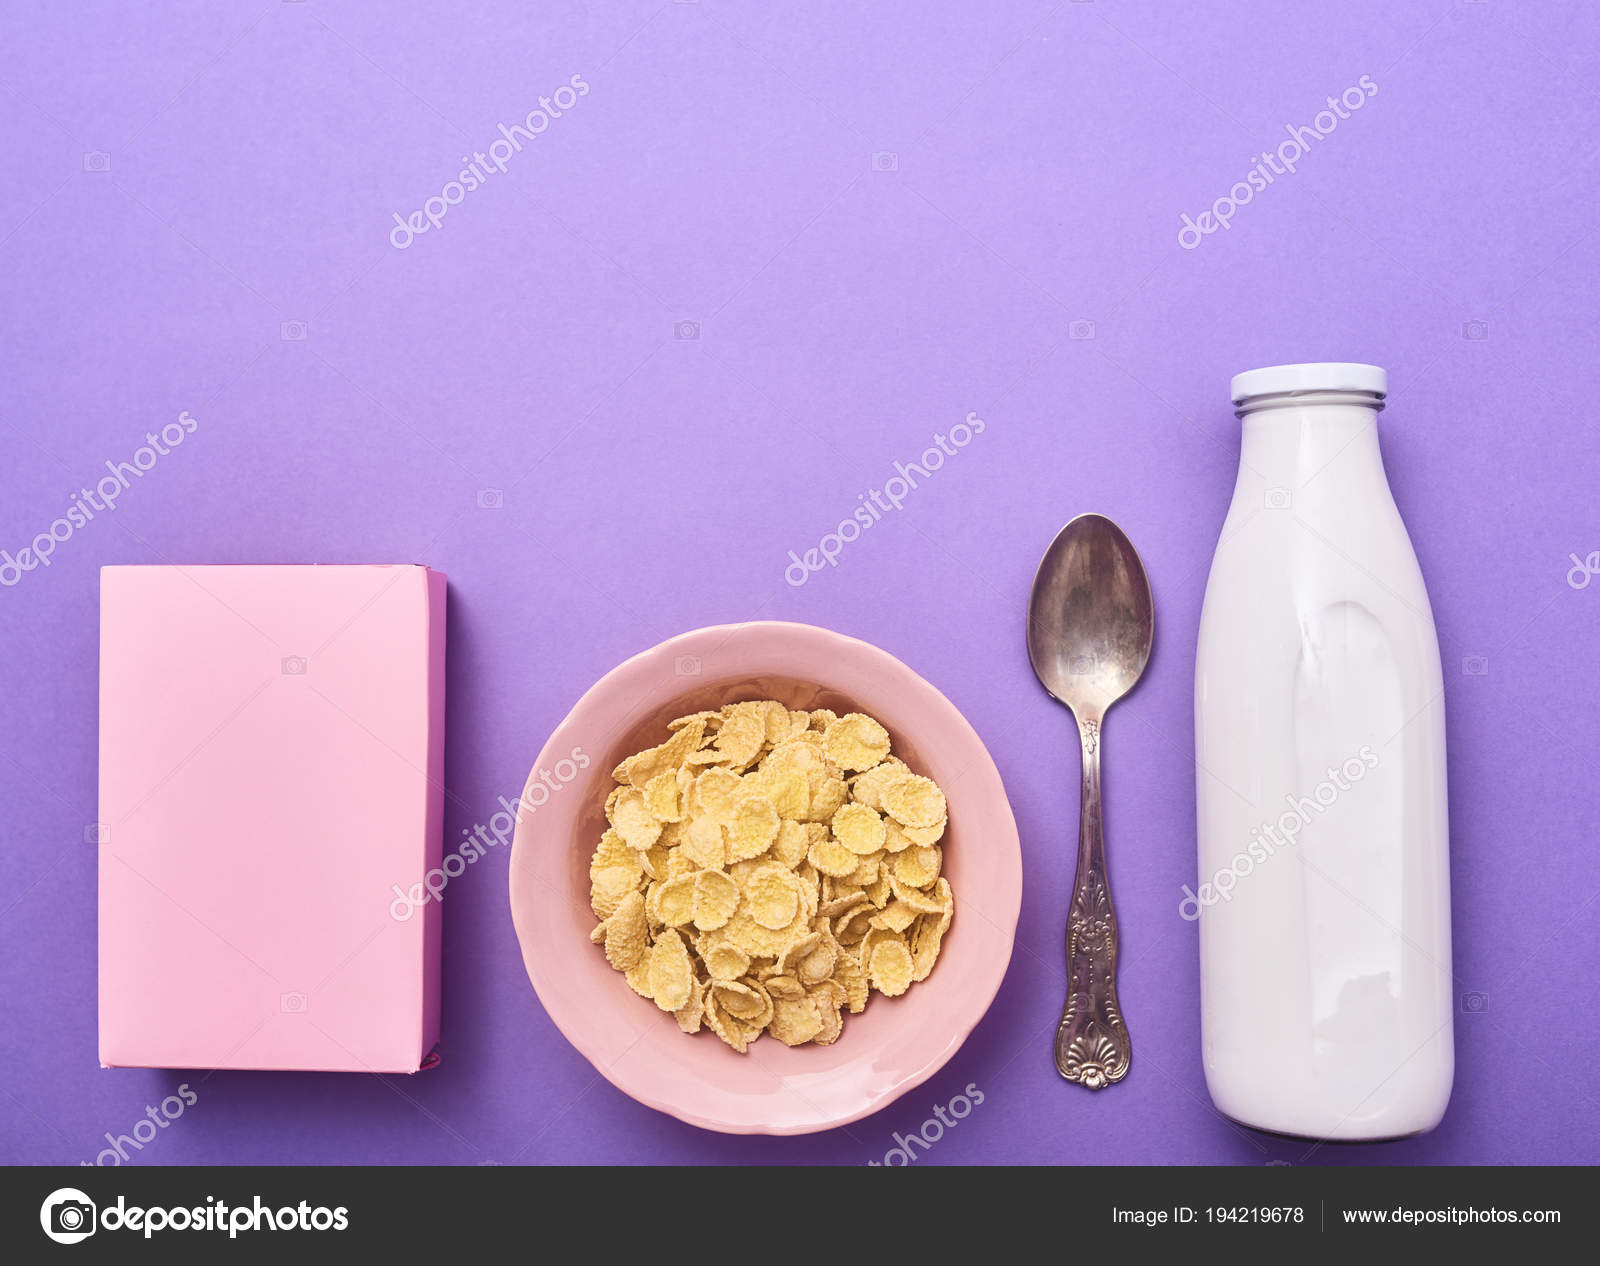 Cereals Pink Bowl Spoon Bottle Milk Pink Box Purple Background